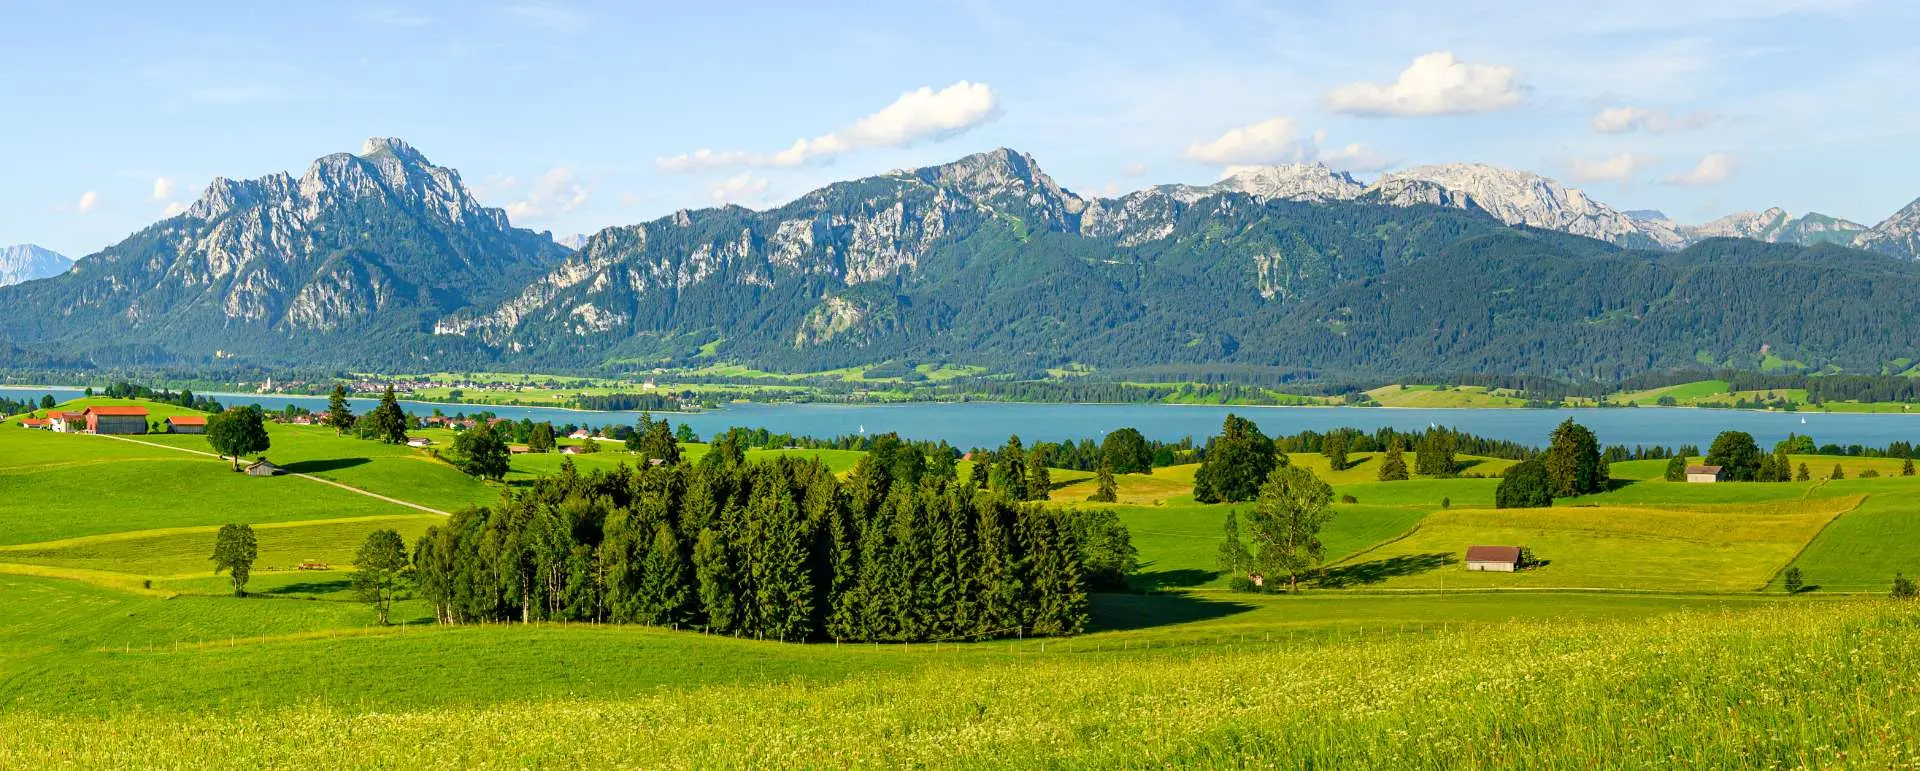 Allgäu - the destination for hikers